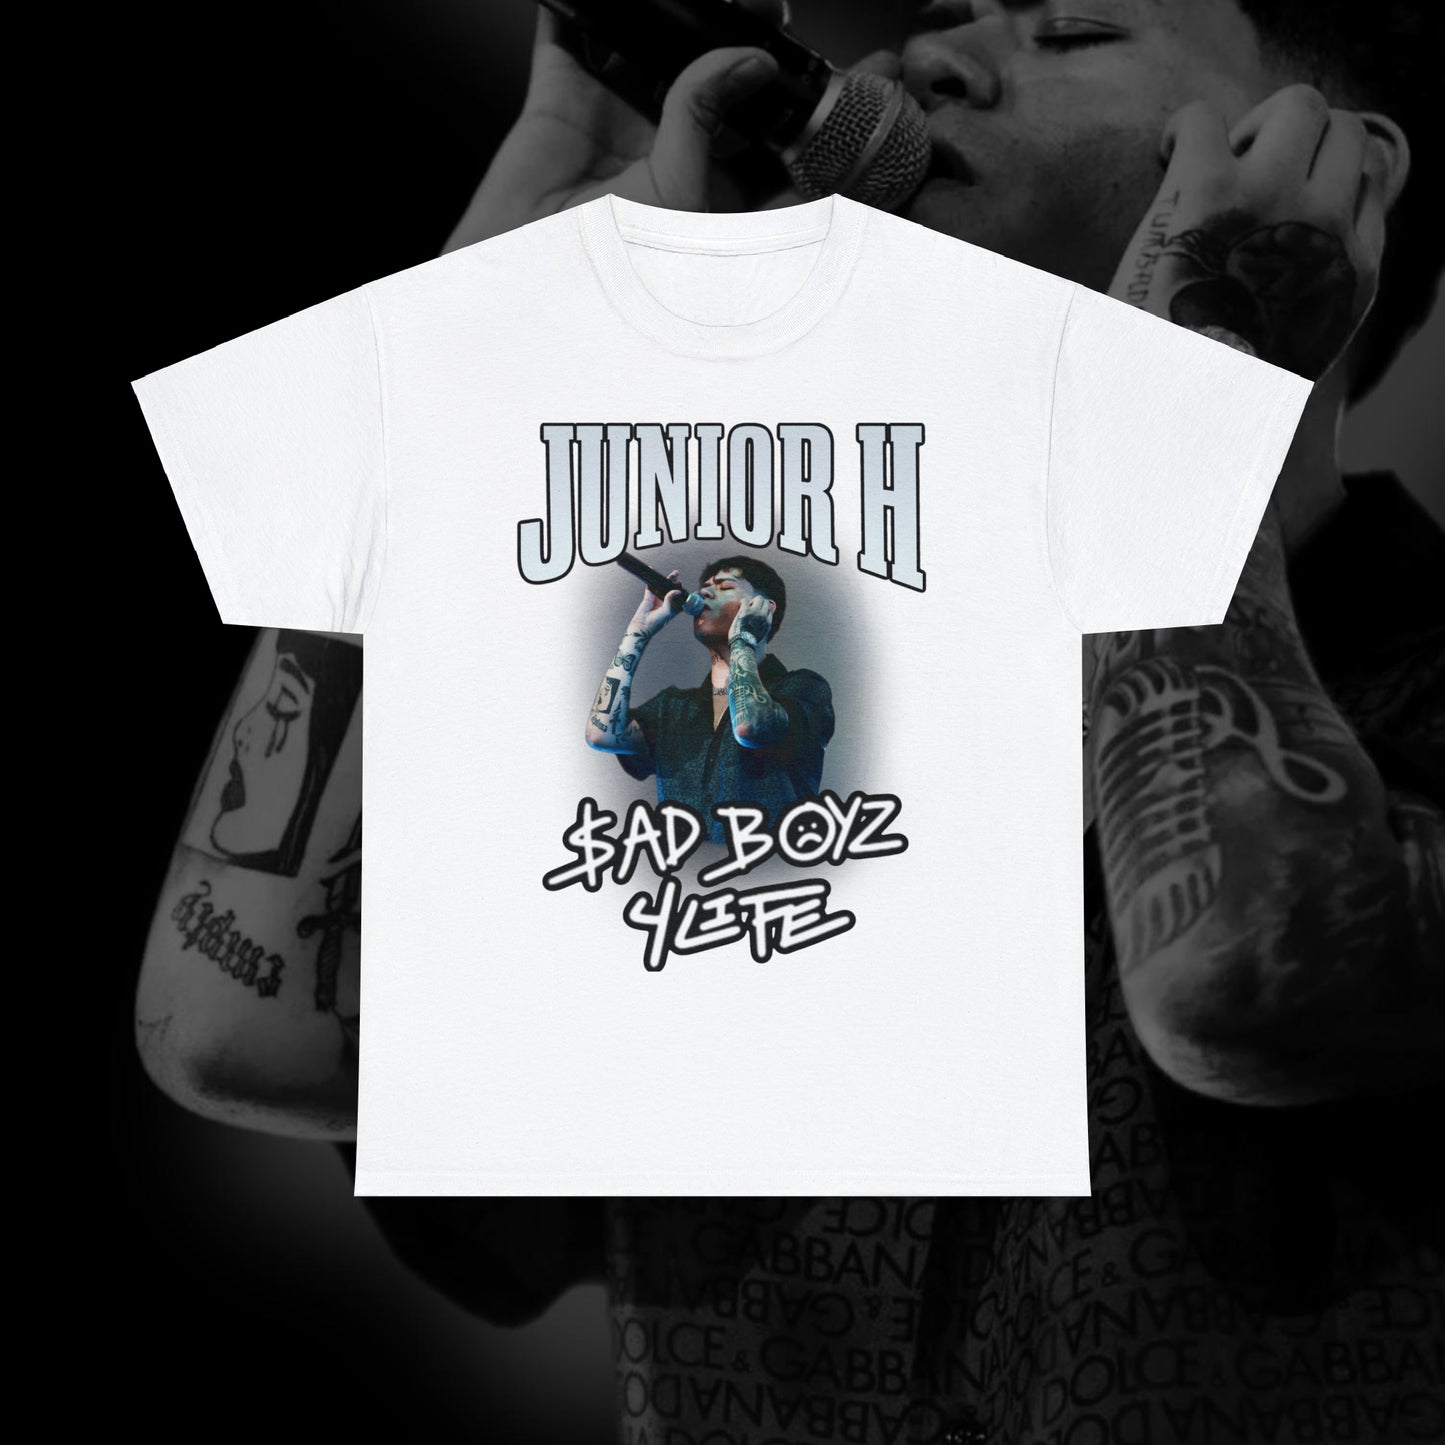 Junior H/Sad Boys 4 Life-Unisex Heavy Cotton Tee